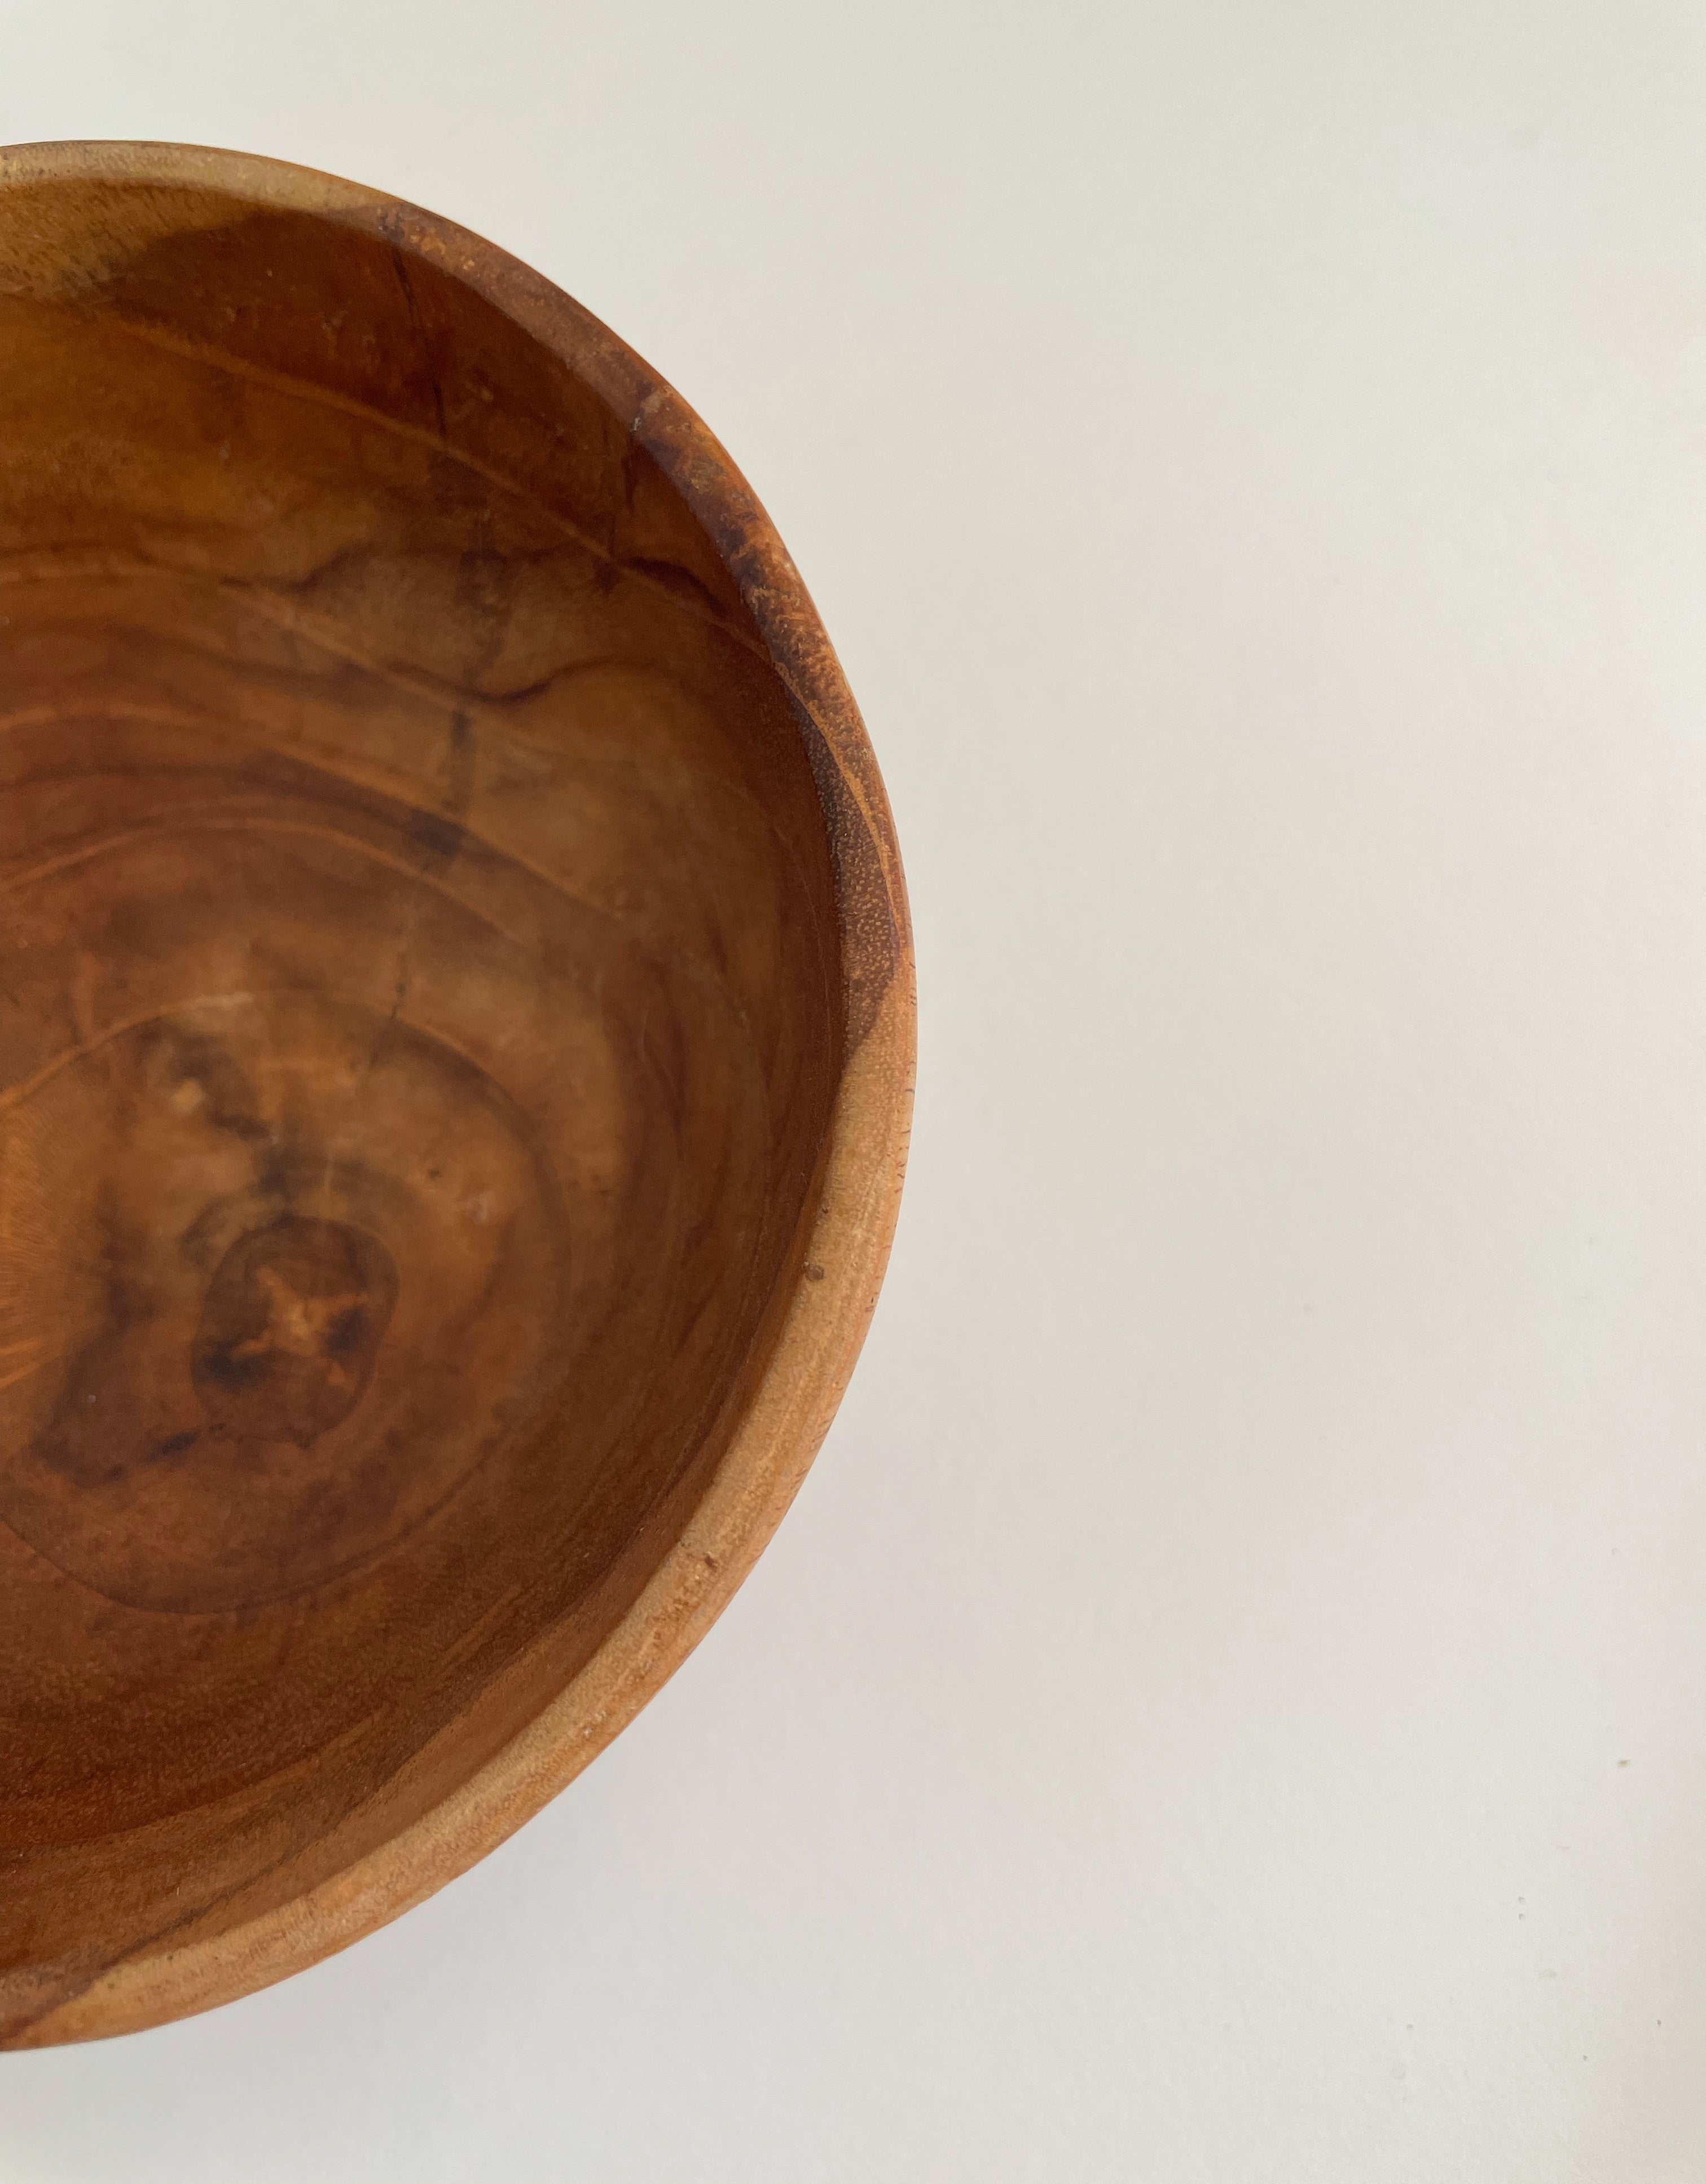 Bowl of acacia wood M